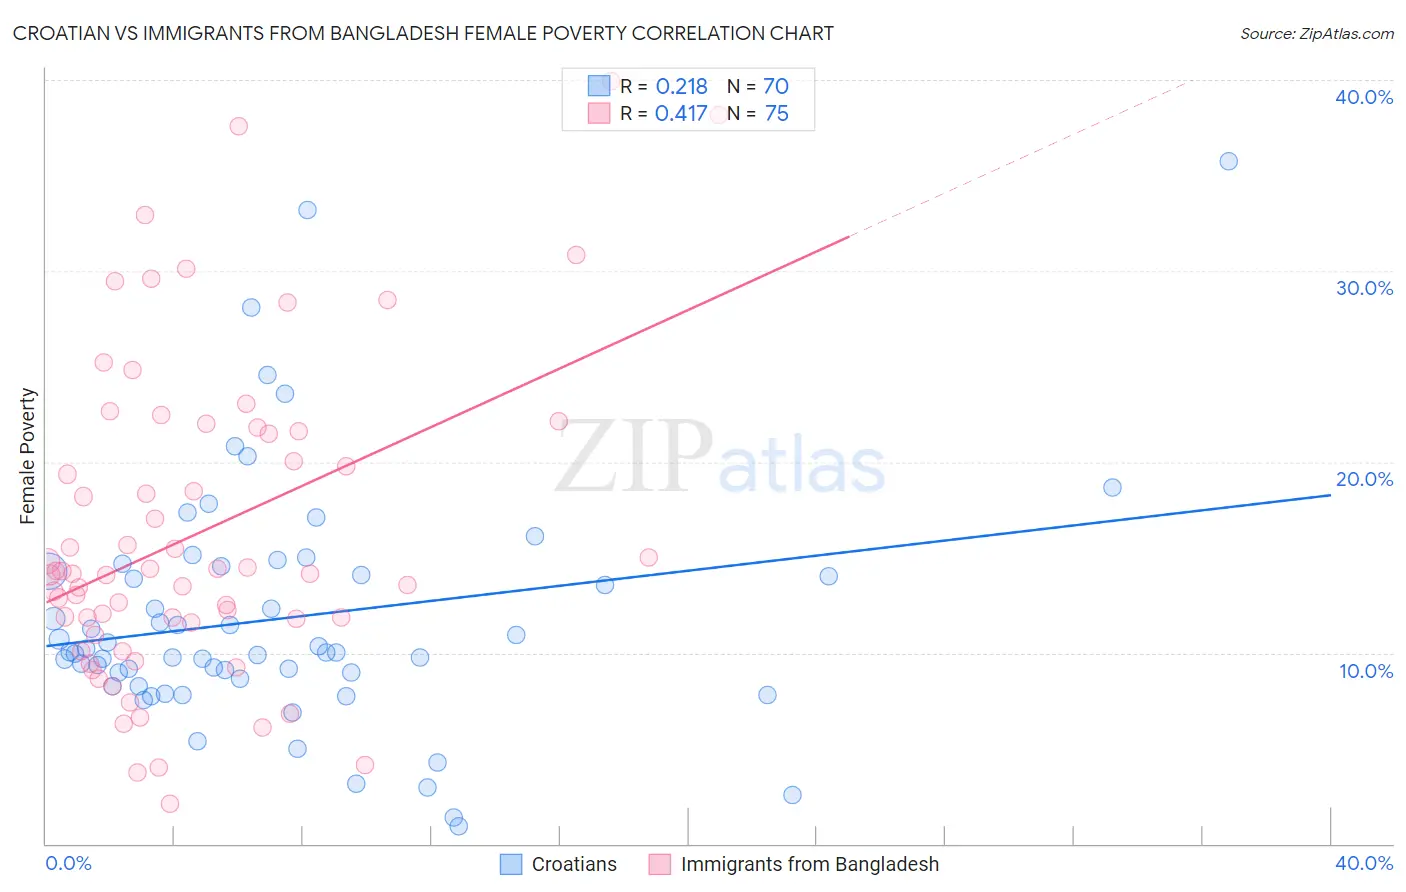 Croatian vs Immigrants from Bangladesh Female Poverty